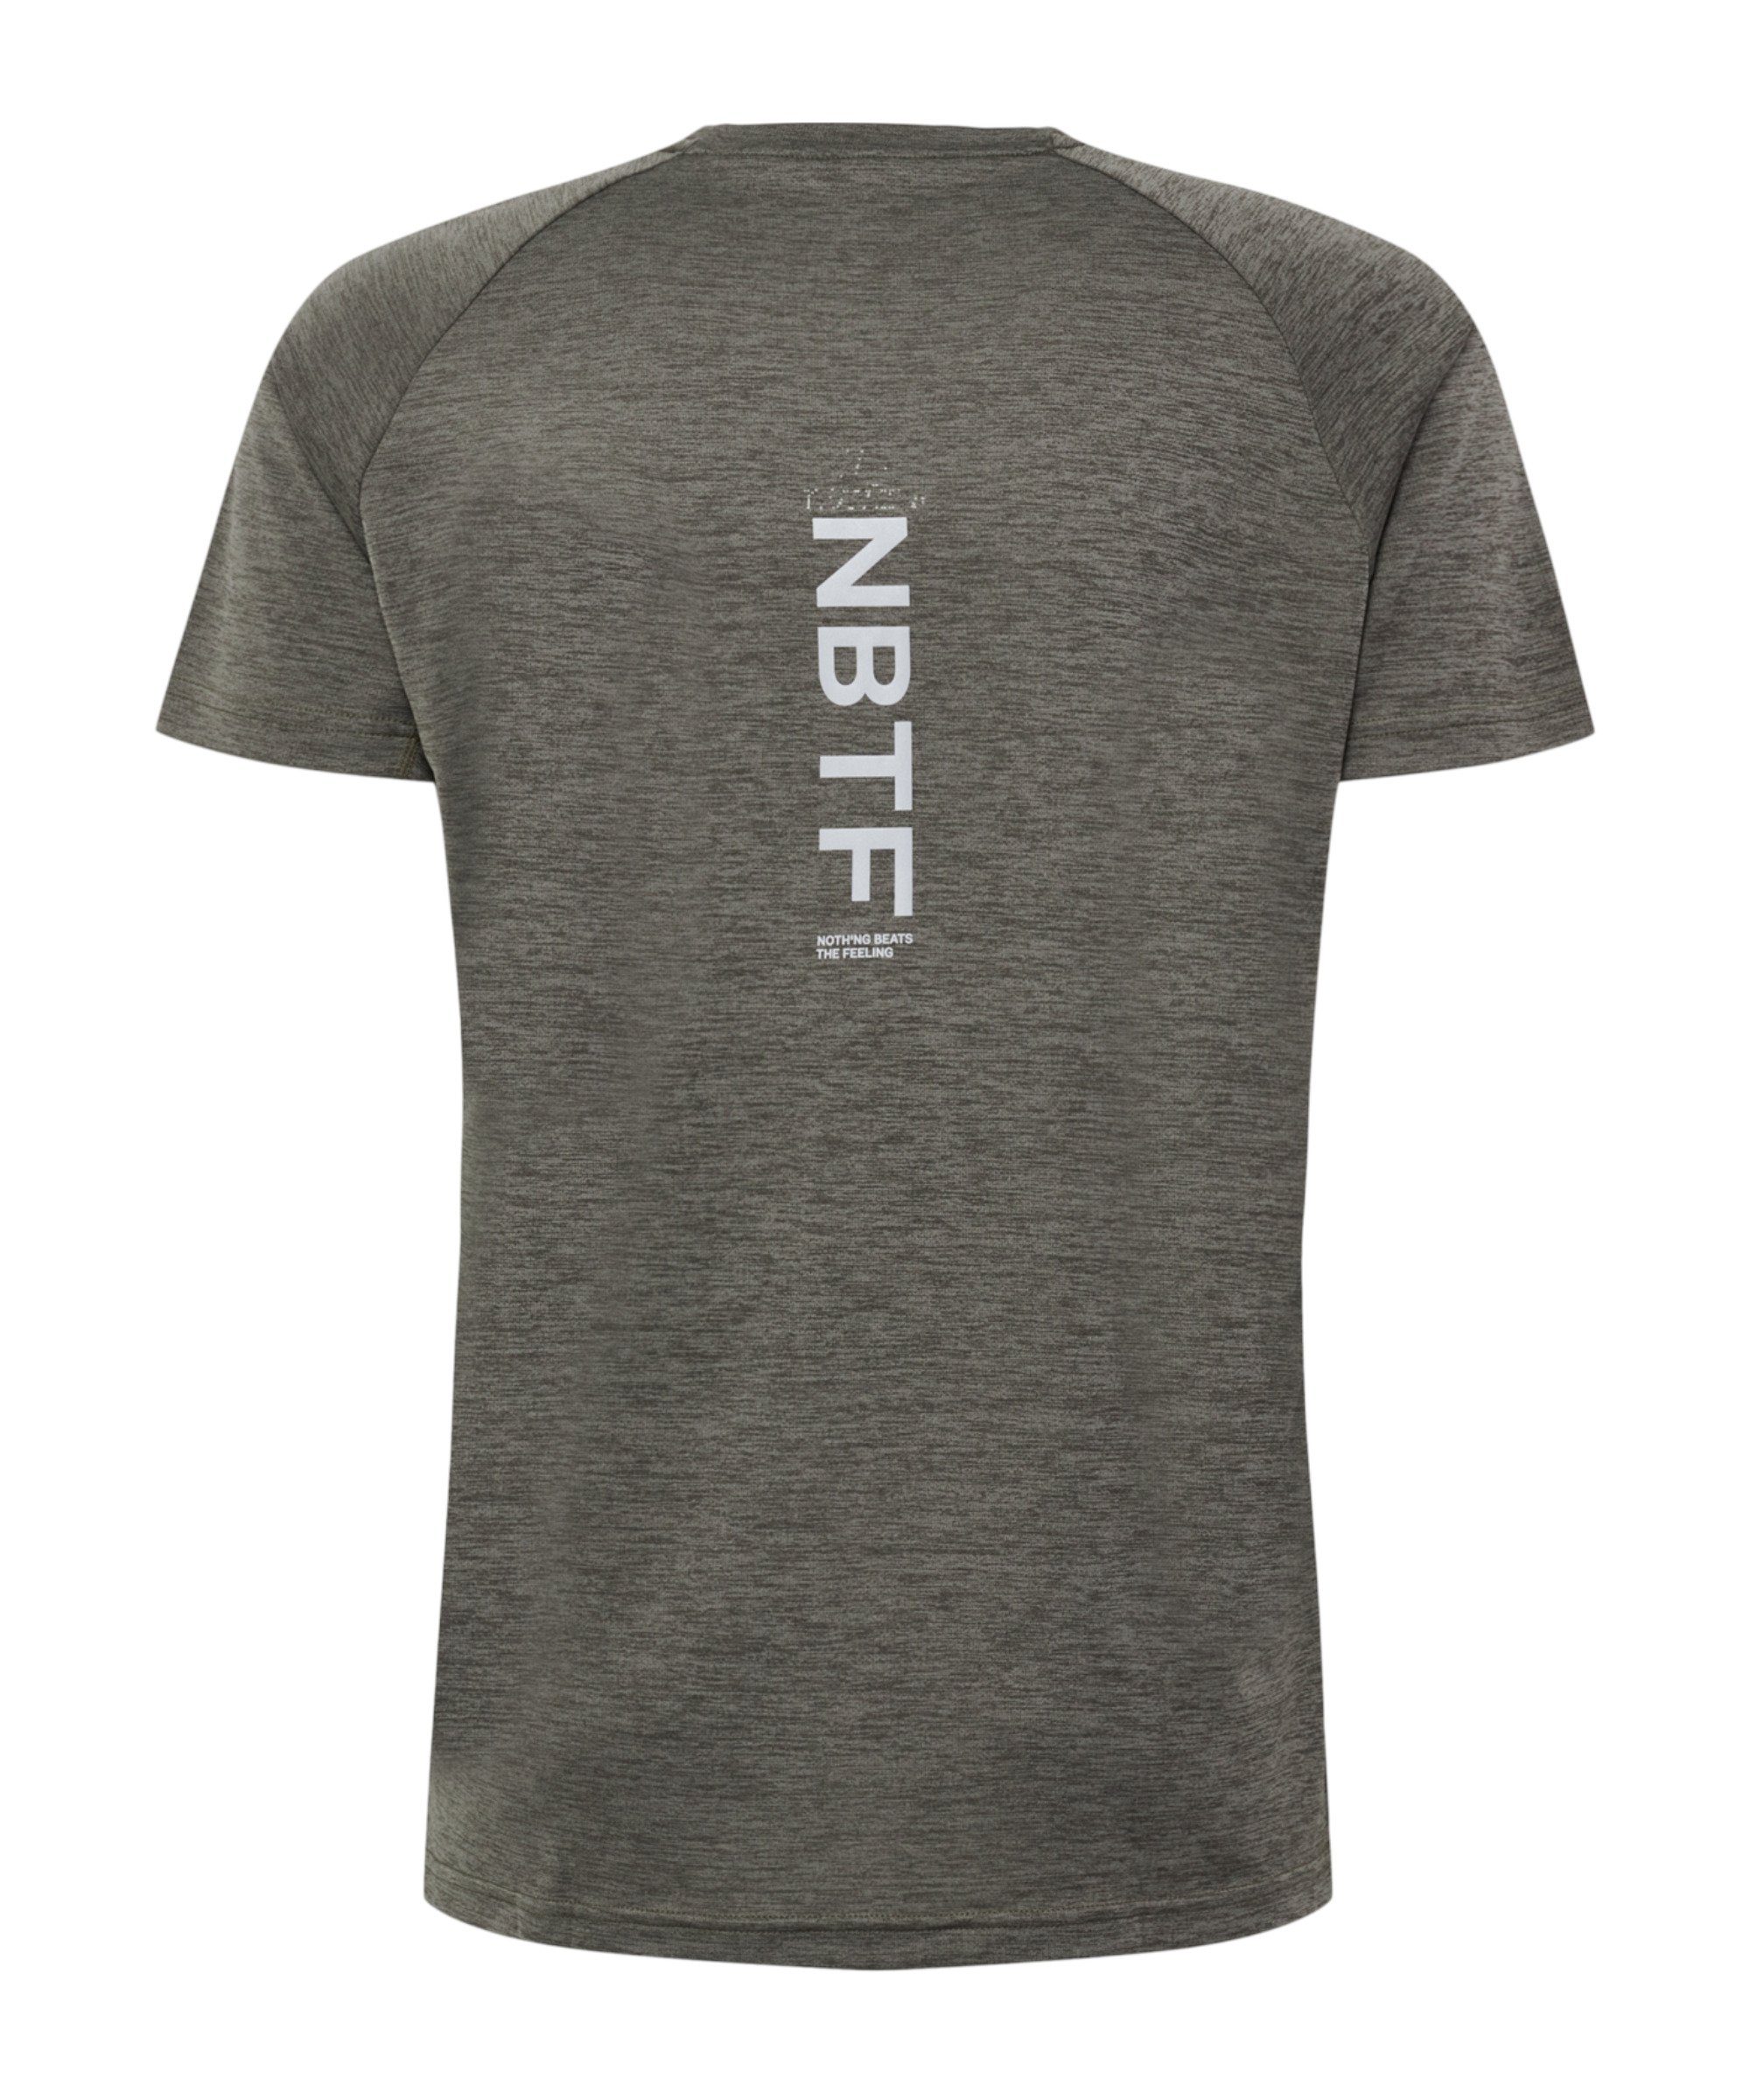 NewLine T-Shirt nwlPACE T-Shirt Melange default